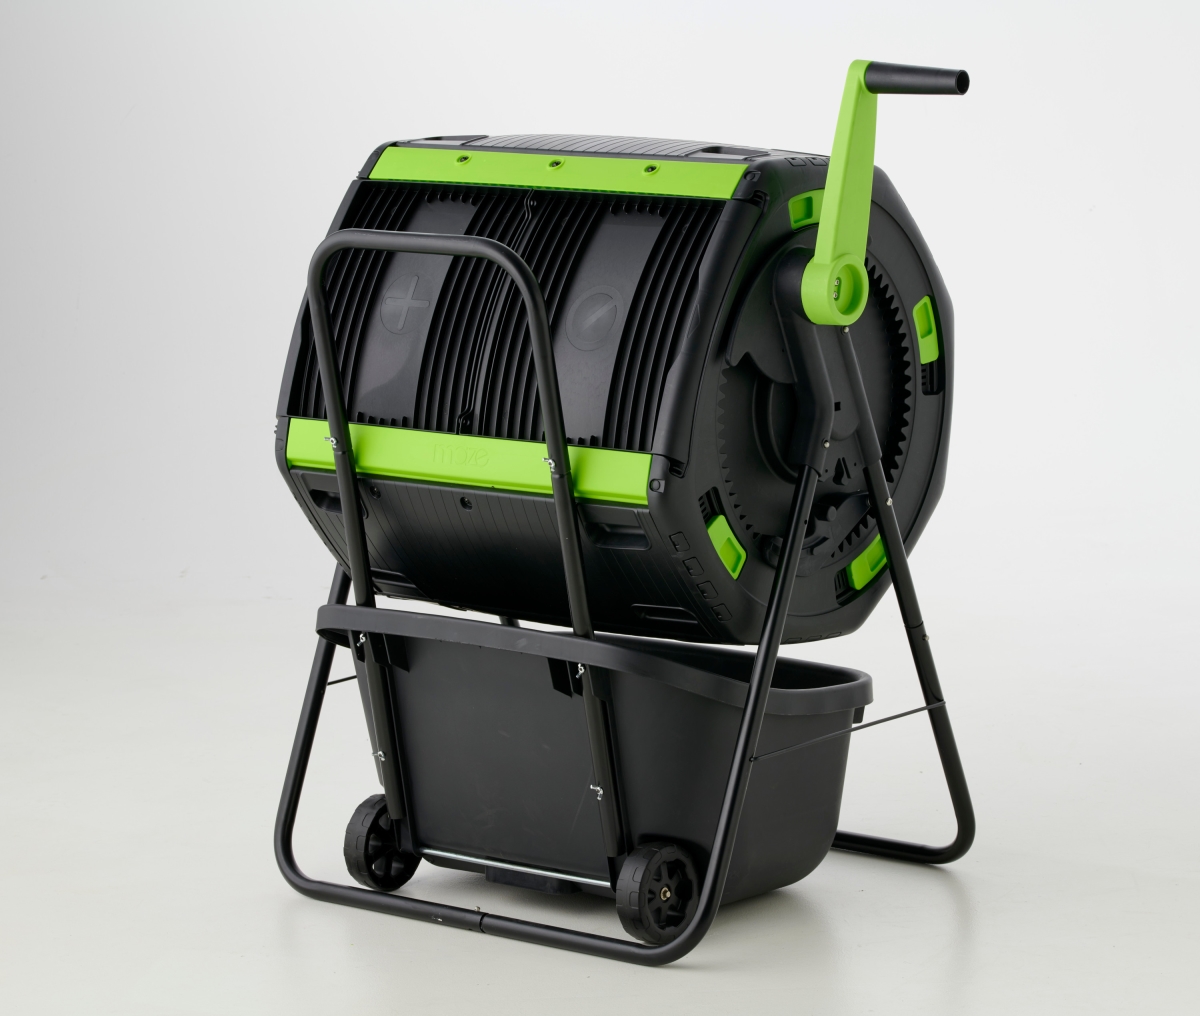 Invernadero RSI- 48 Gallon Geared Two Compartment Compost Tumbler and Cart